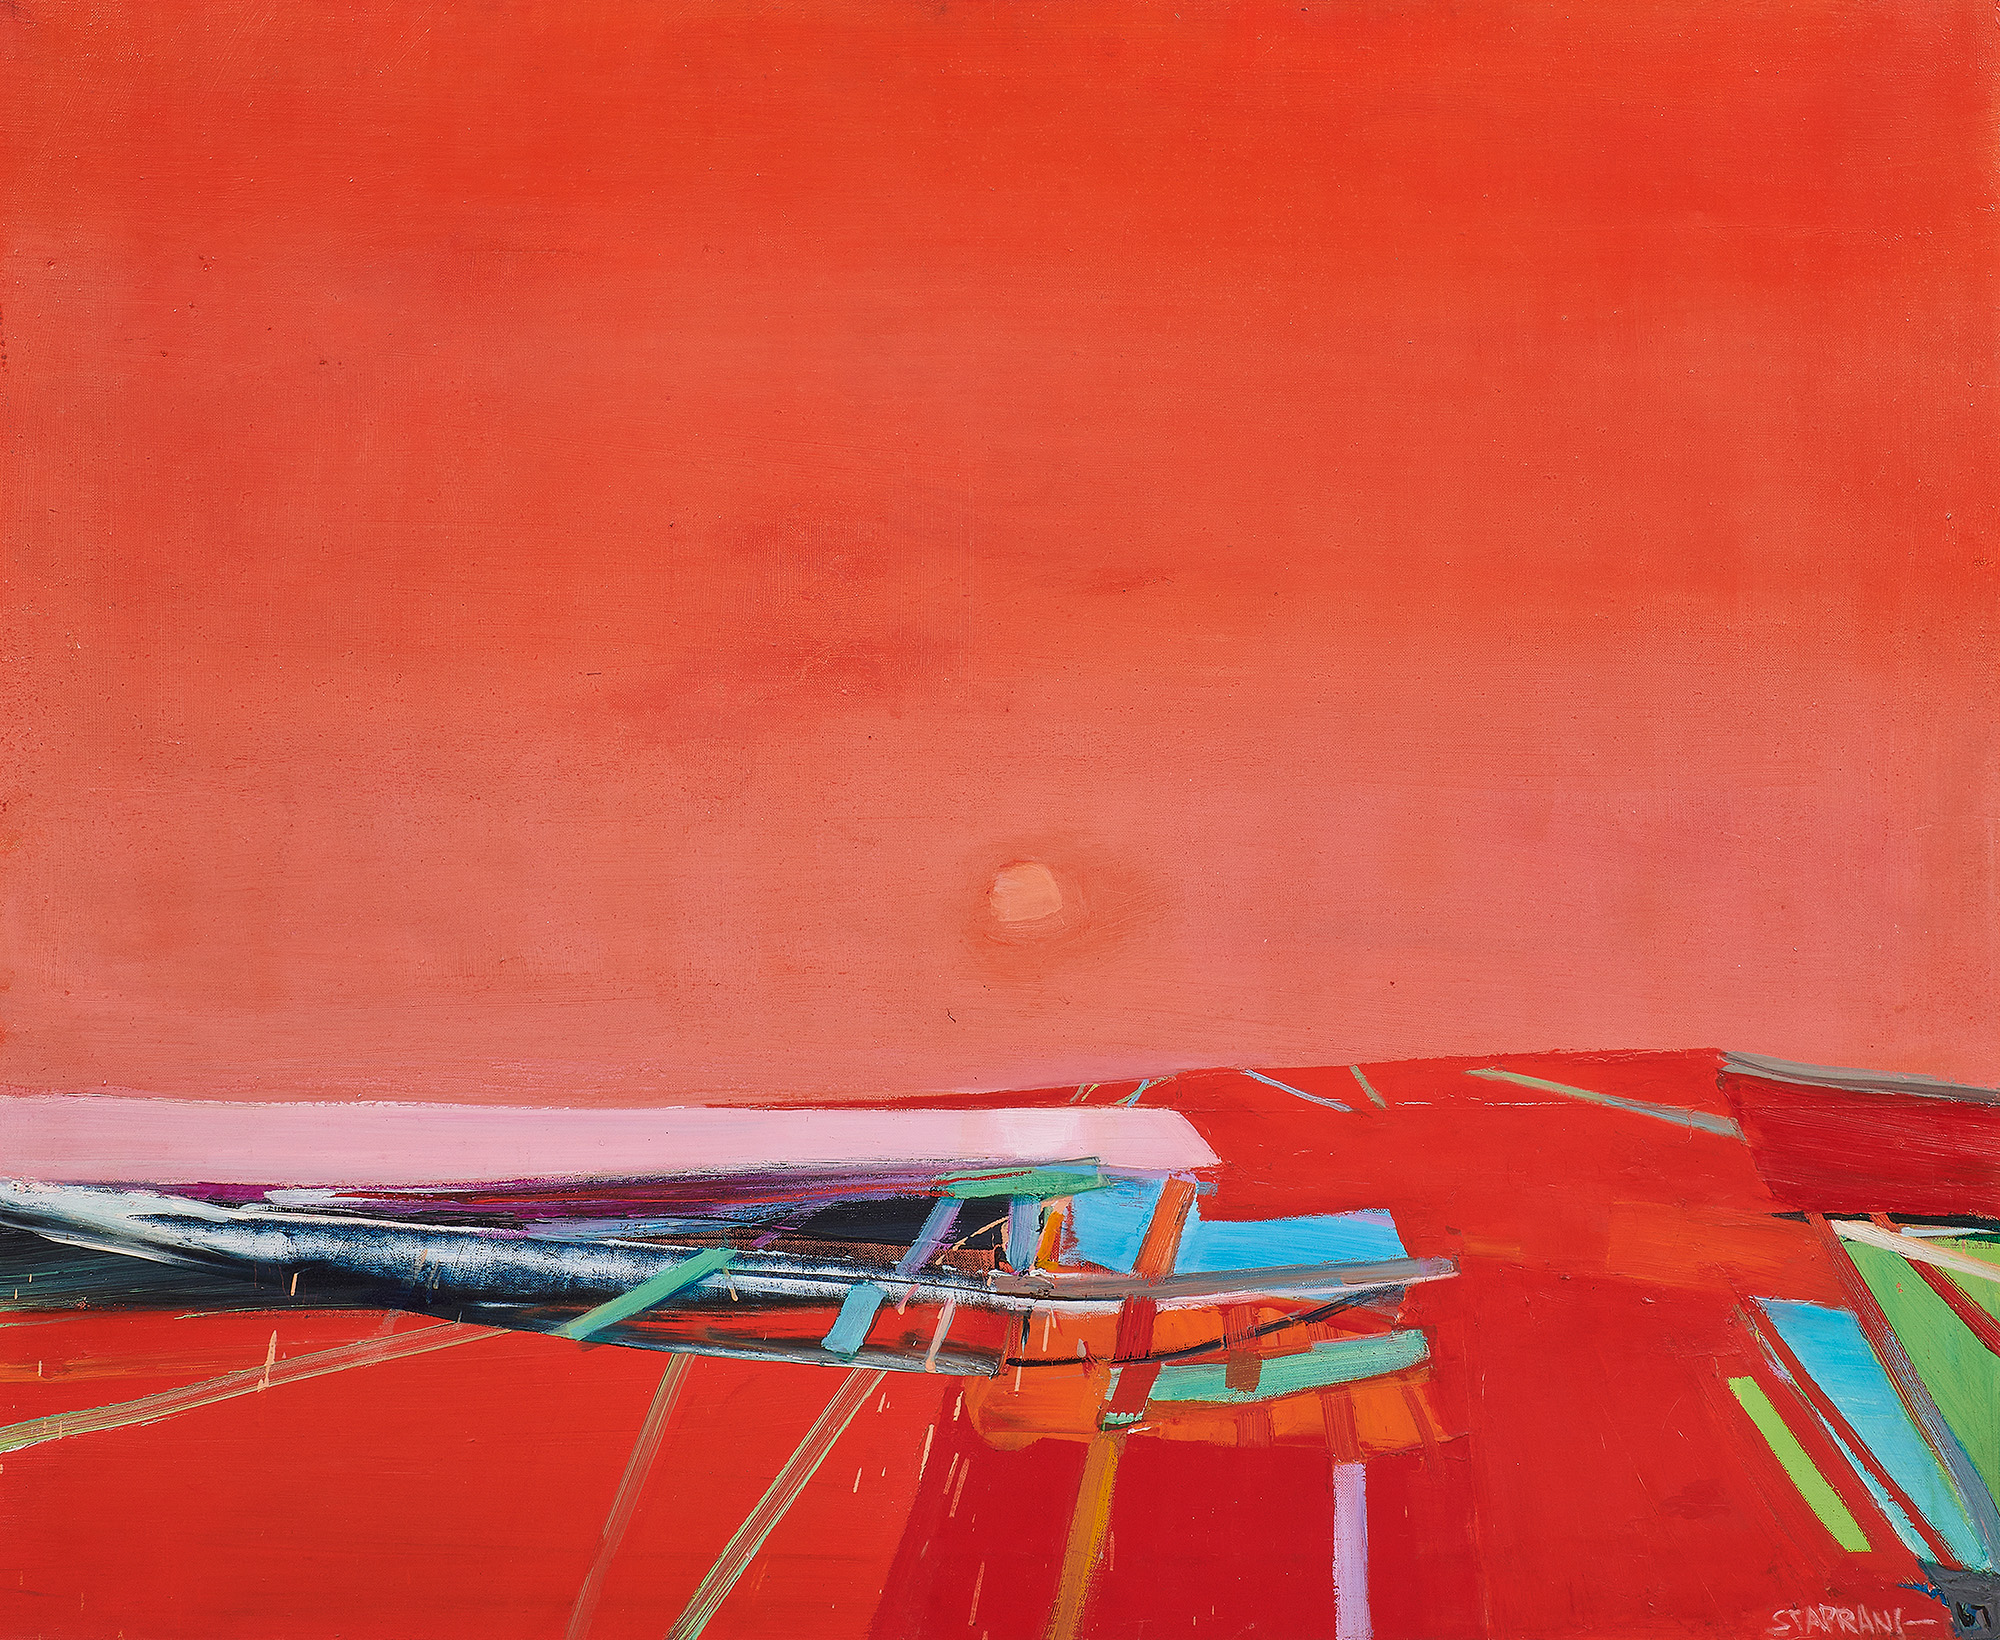 Raimonds Staprans (Latvian/American, b. 1926), Red Sun, 1967, oil on canvas, 28″ x 34″.